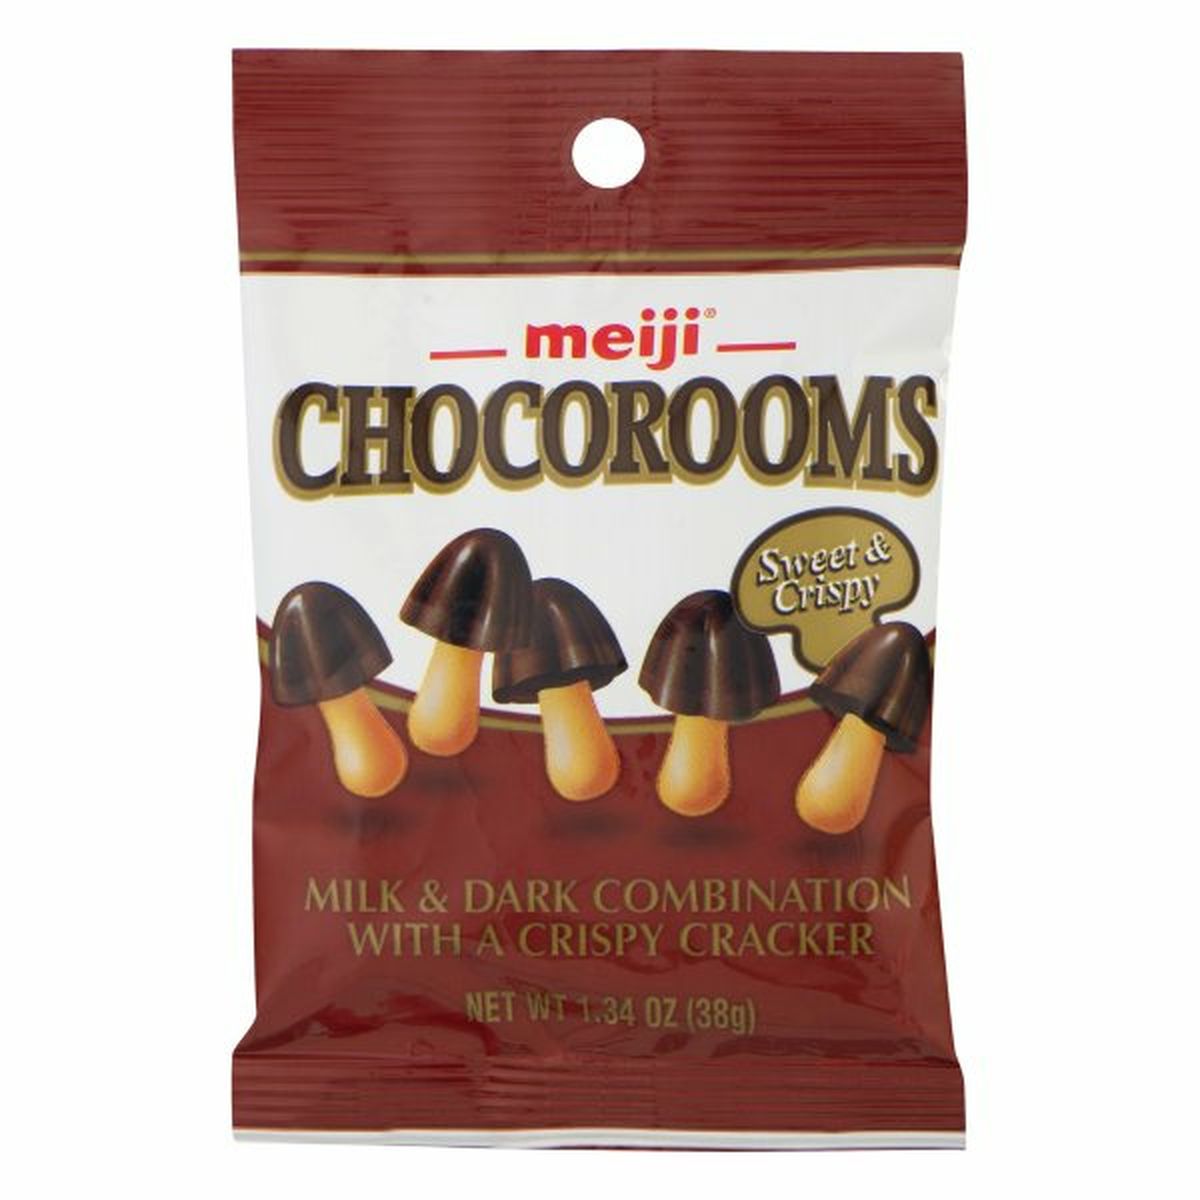 Calories in Meiji Chocorooms, Sweet & Crispy